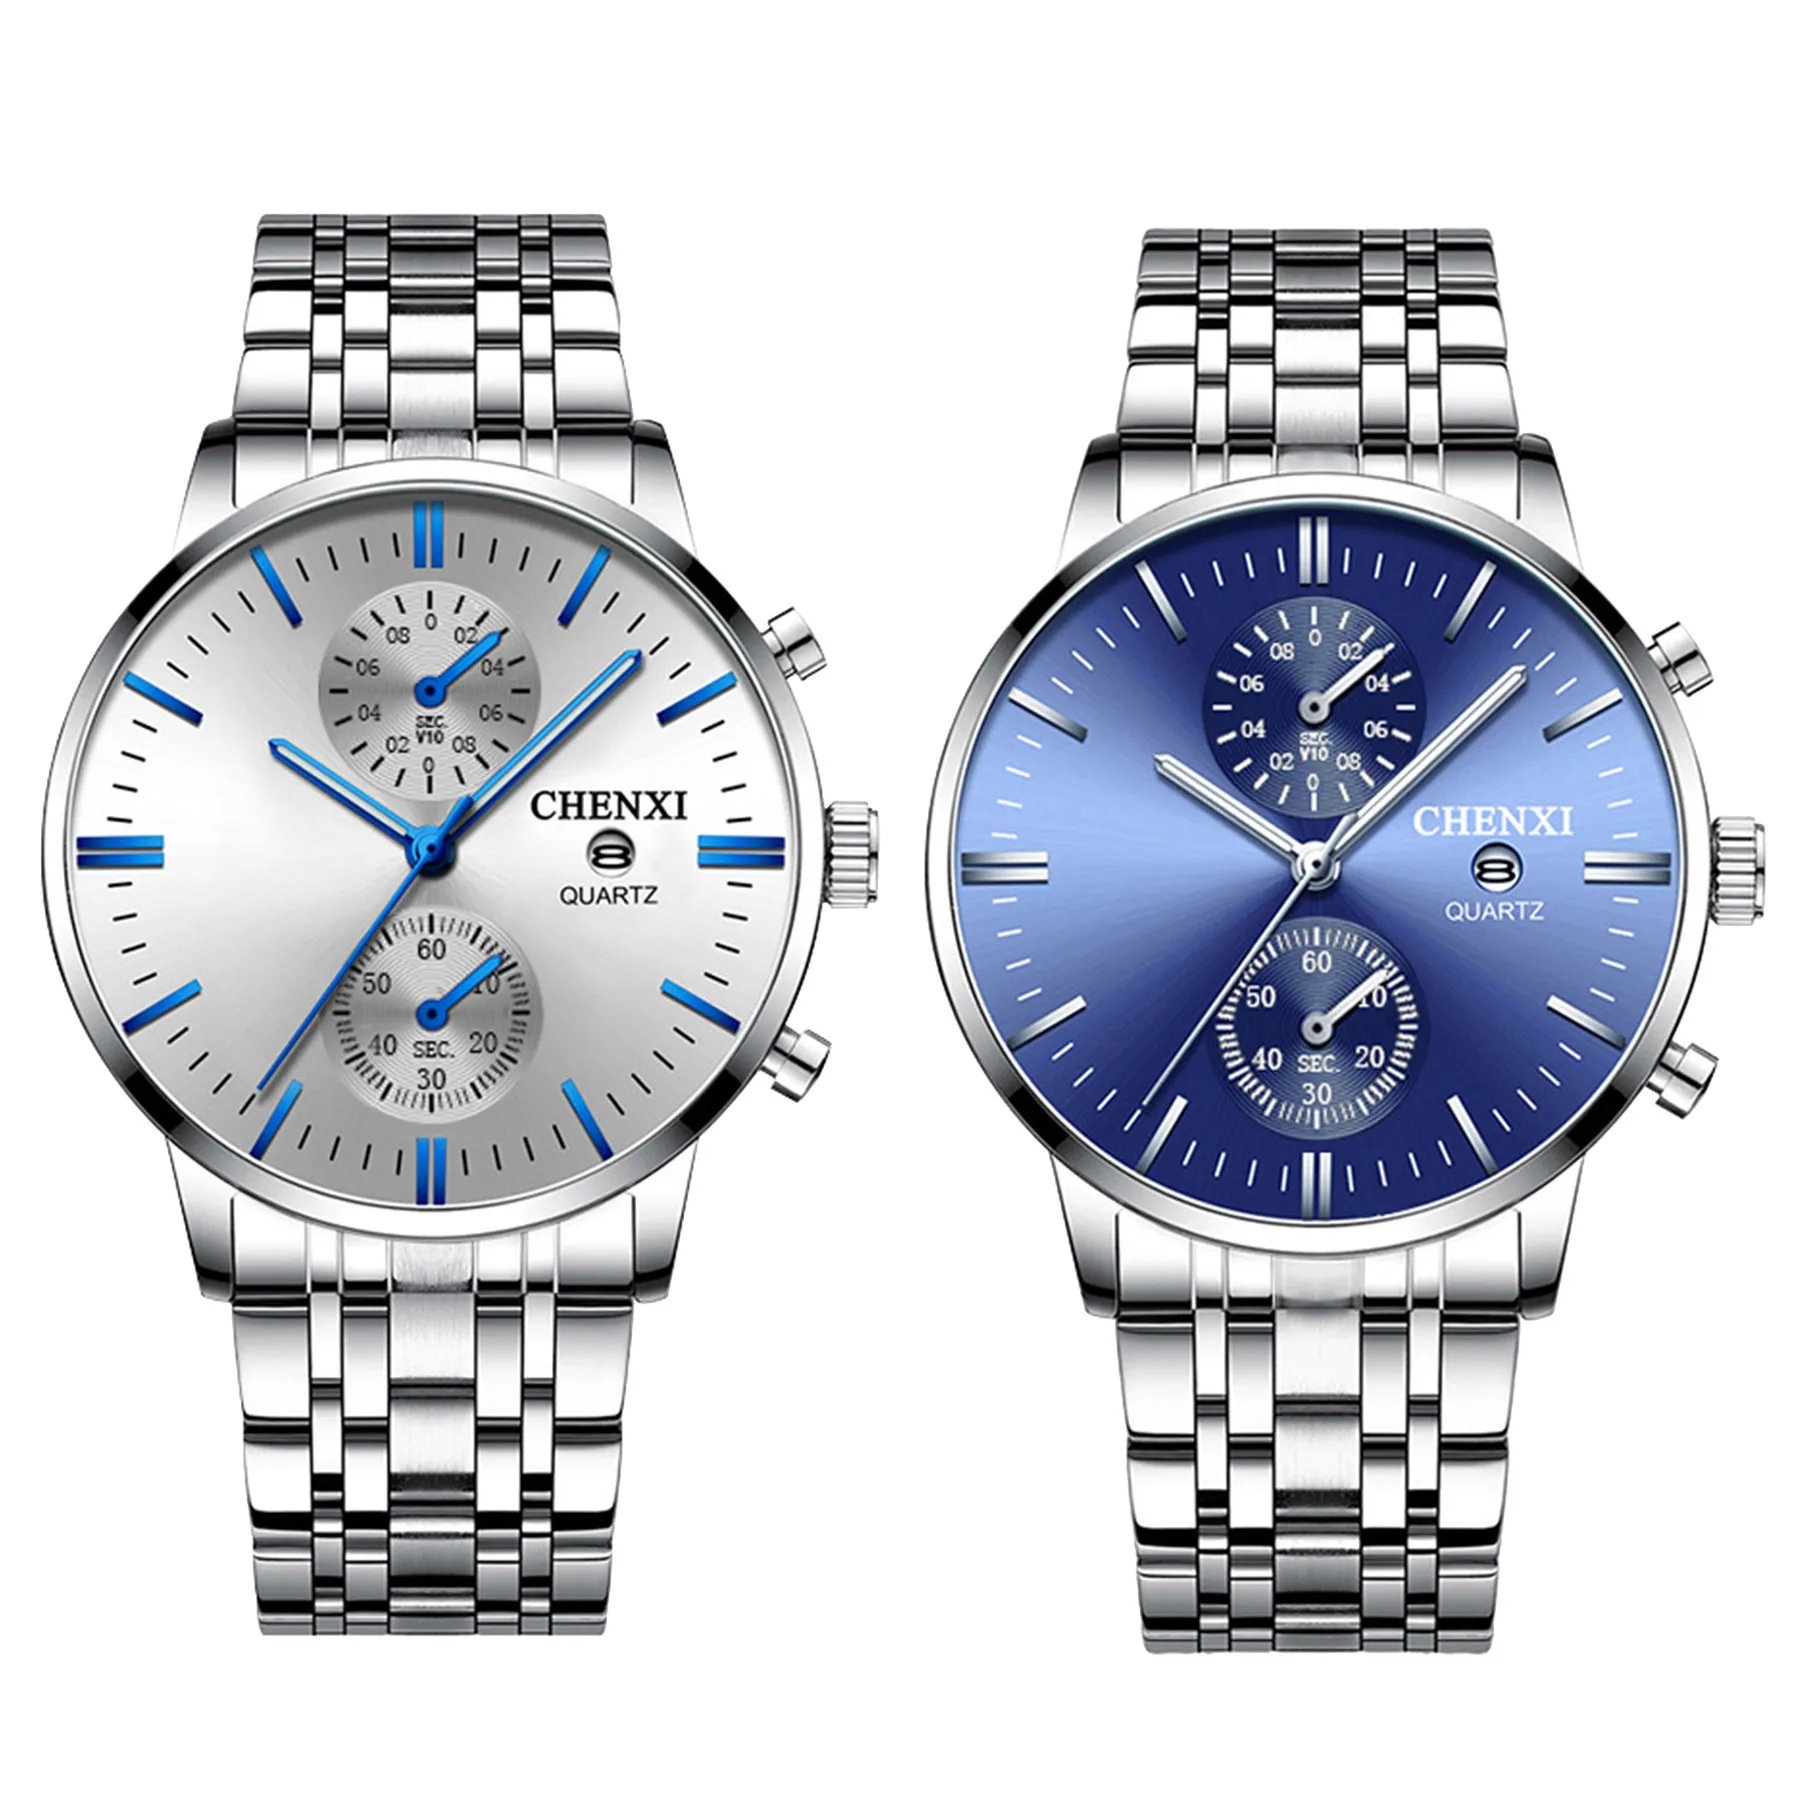 

Lancardo Luxury Men's Fashion Watches Two-eye Decoration Calendar Dial Stainless Steel Strap Quartz Watch relogio masculino